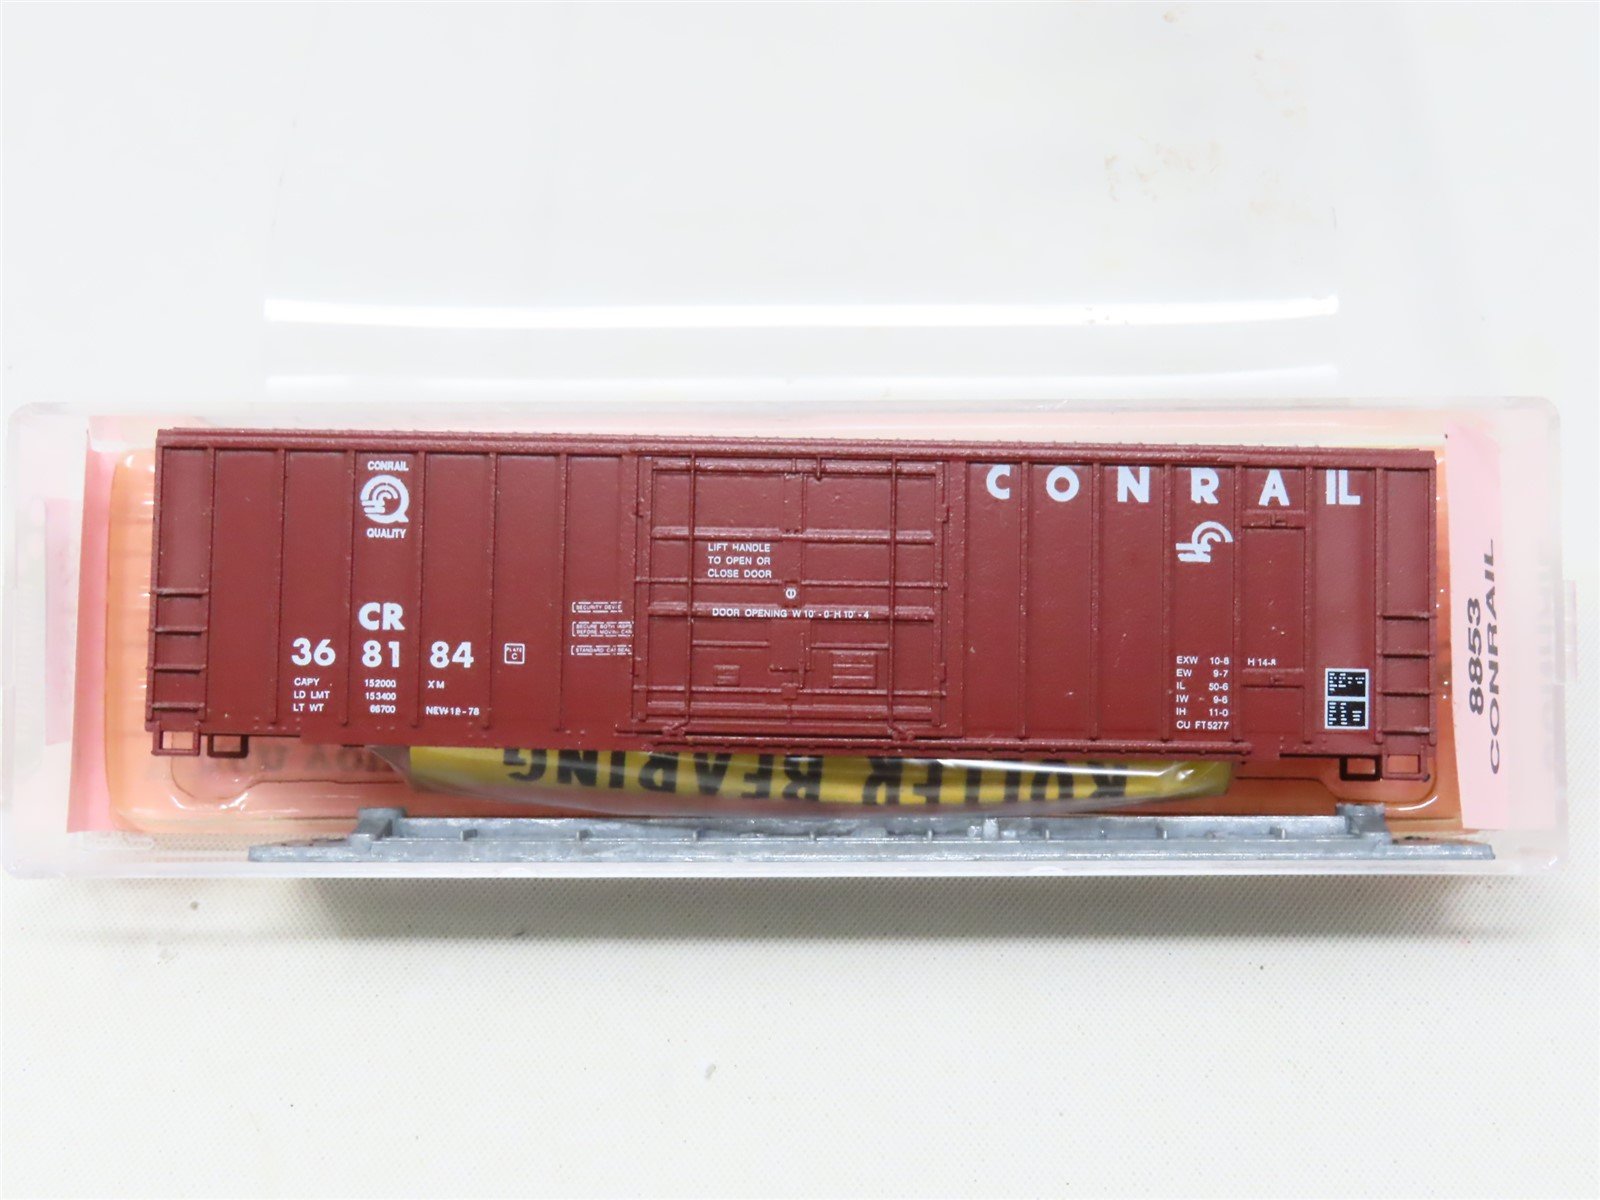 N Scale Roundhouse MDC 8853 CR Conrail Single Plug Door Box Car #368184 Kit